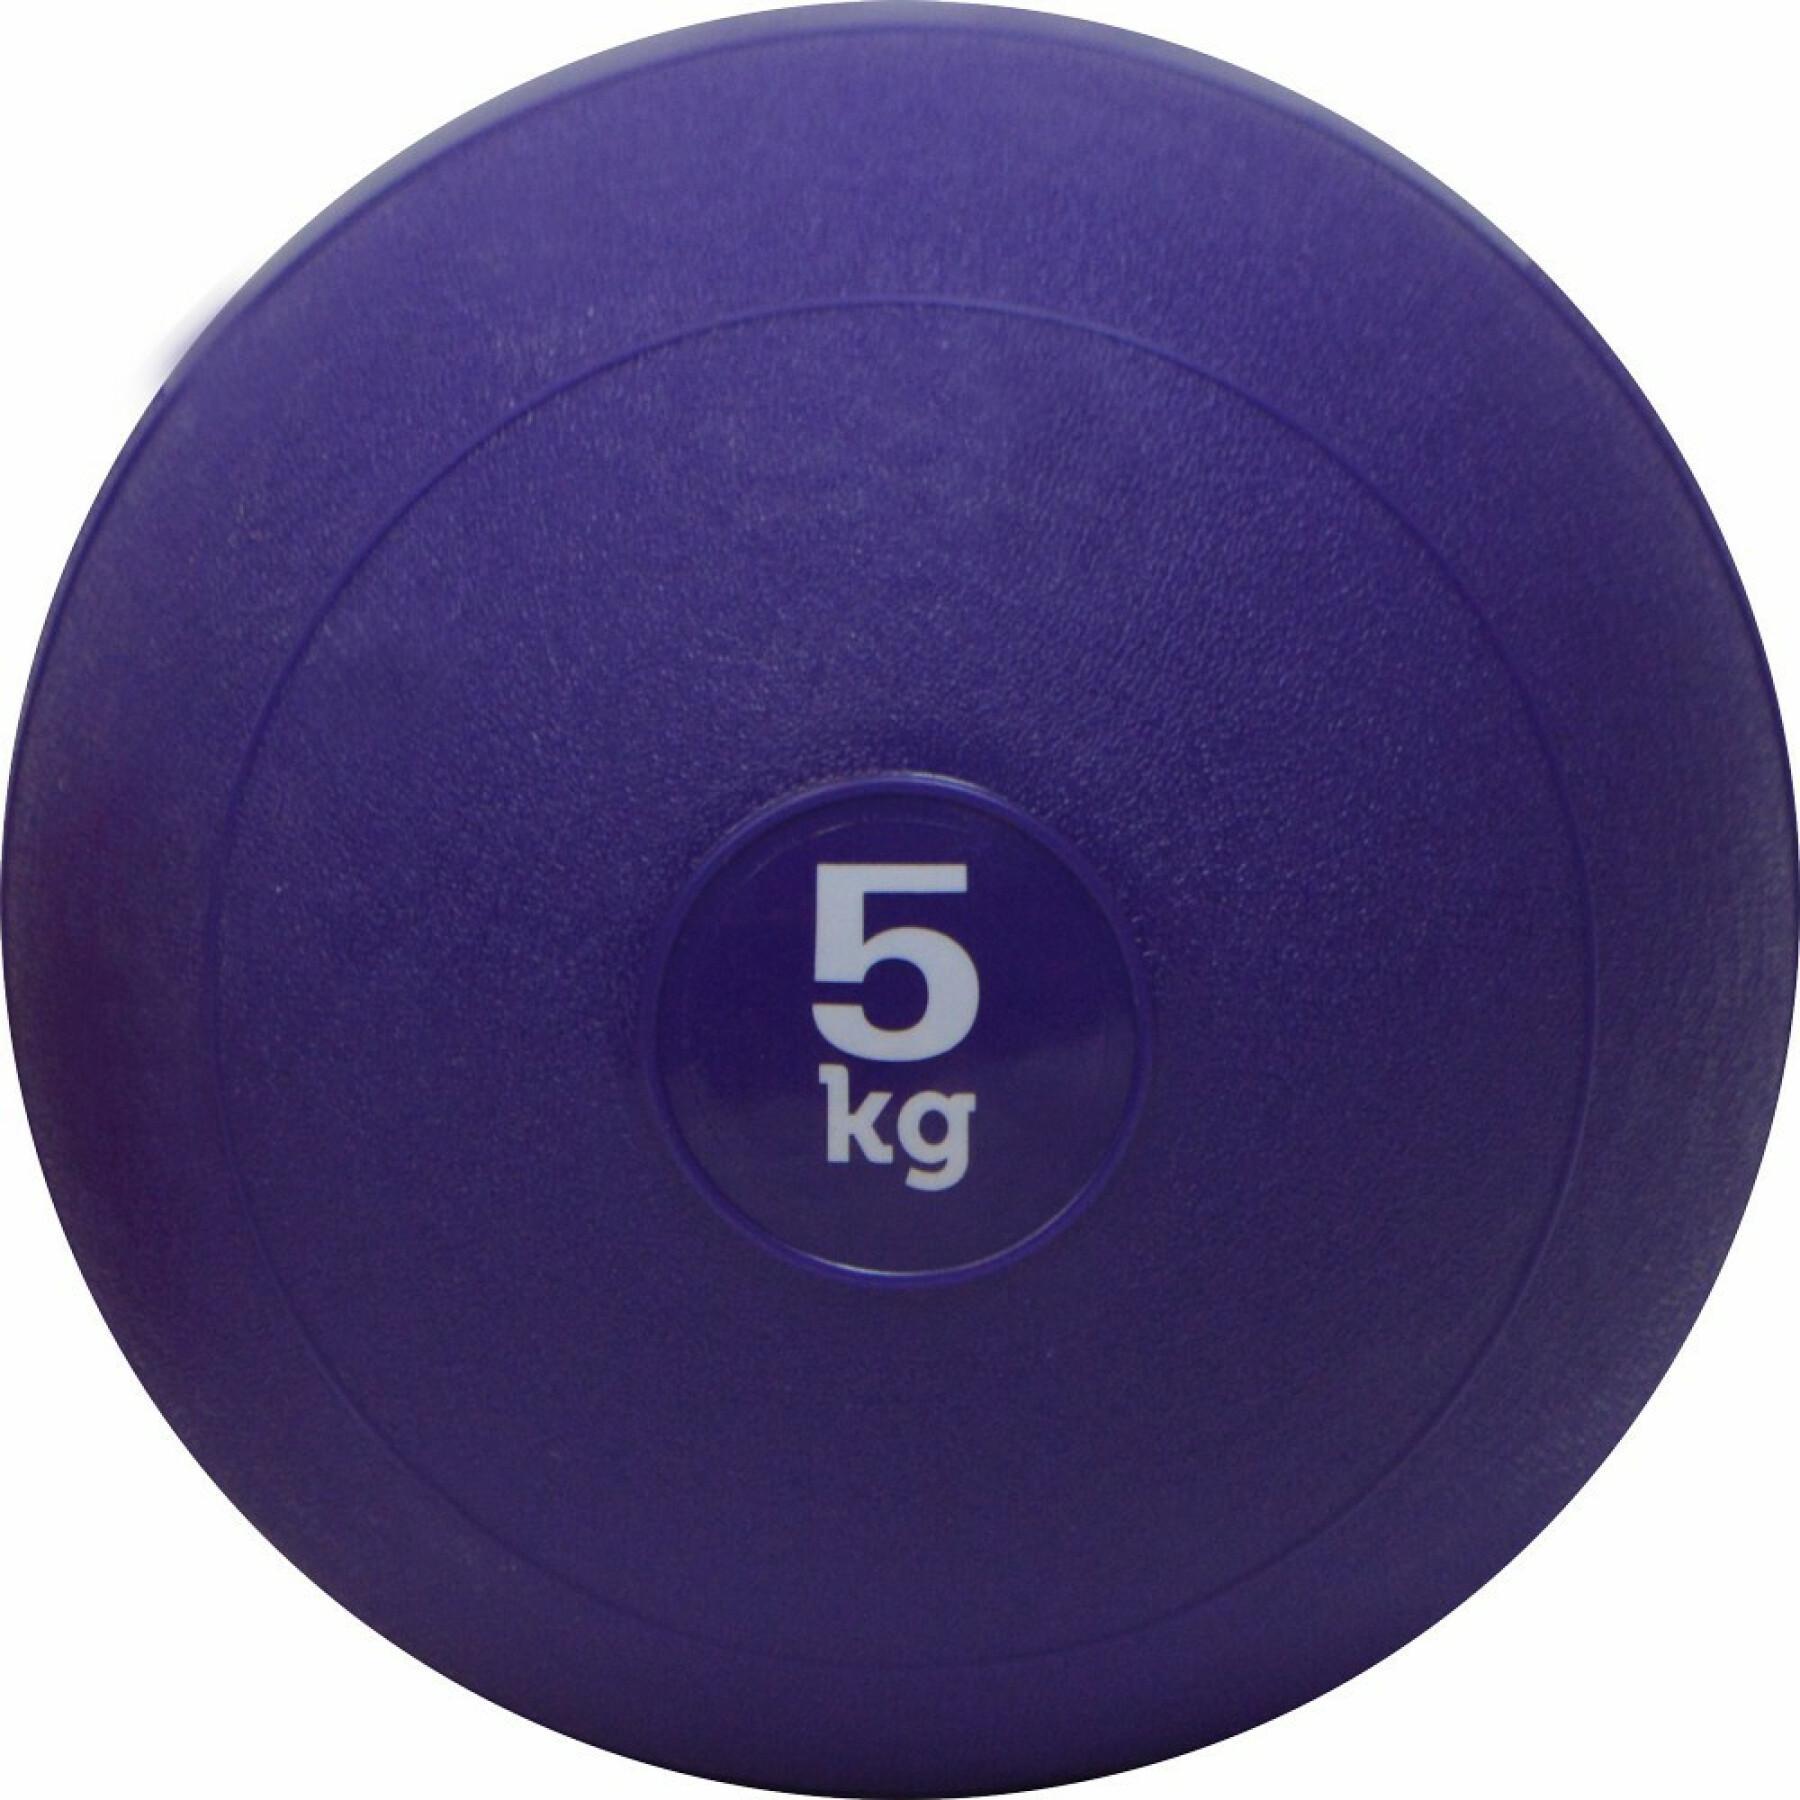 Flexible inflatable medicine ball Sporti France